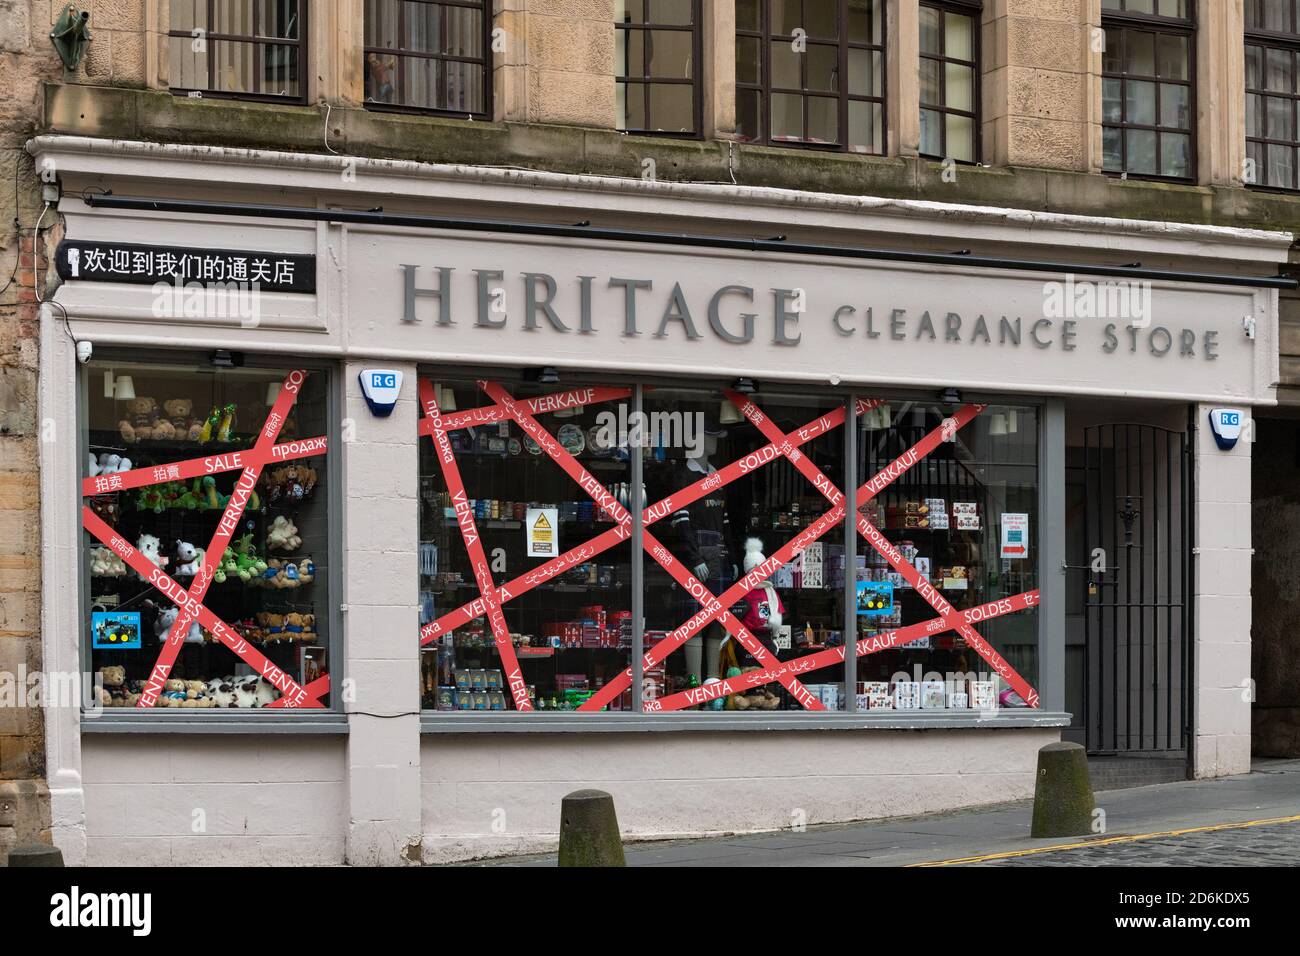 Sale signs in different languages during coronavirus pandemic - Heritage Clearance Store, Edinburgh Royal Mile, Edinburgh, Scotland, UK Stock Photo